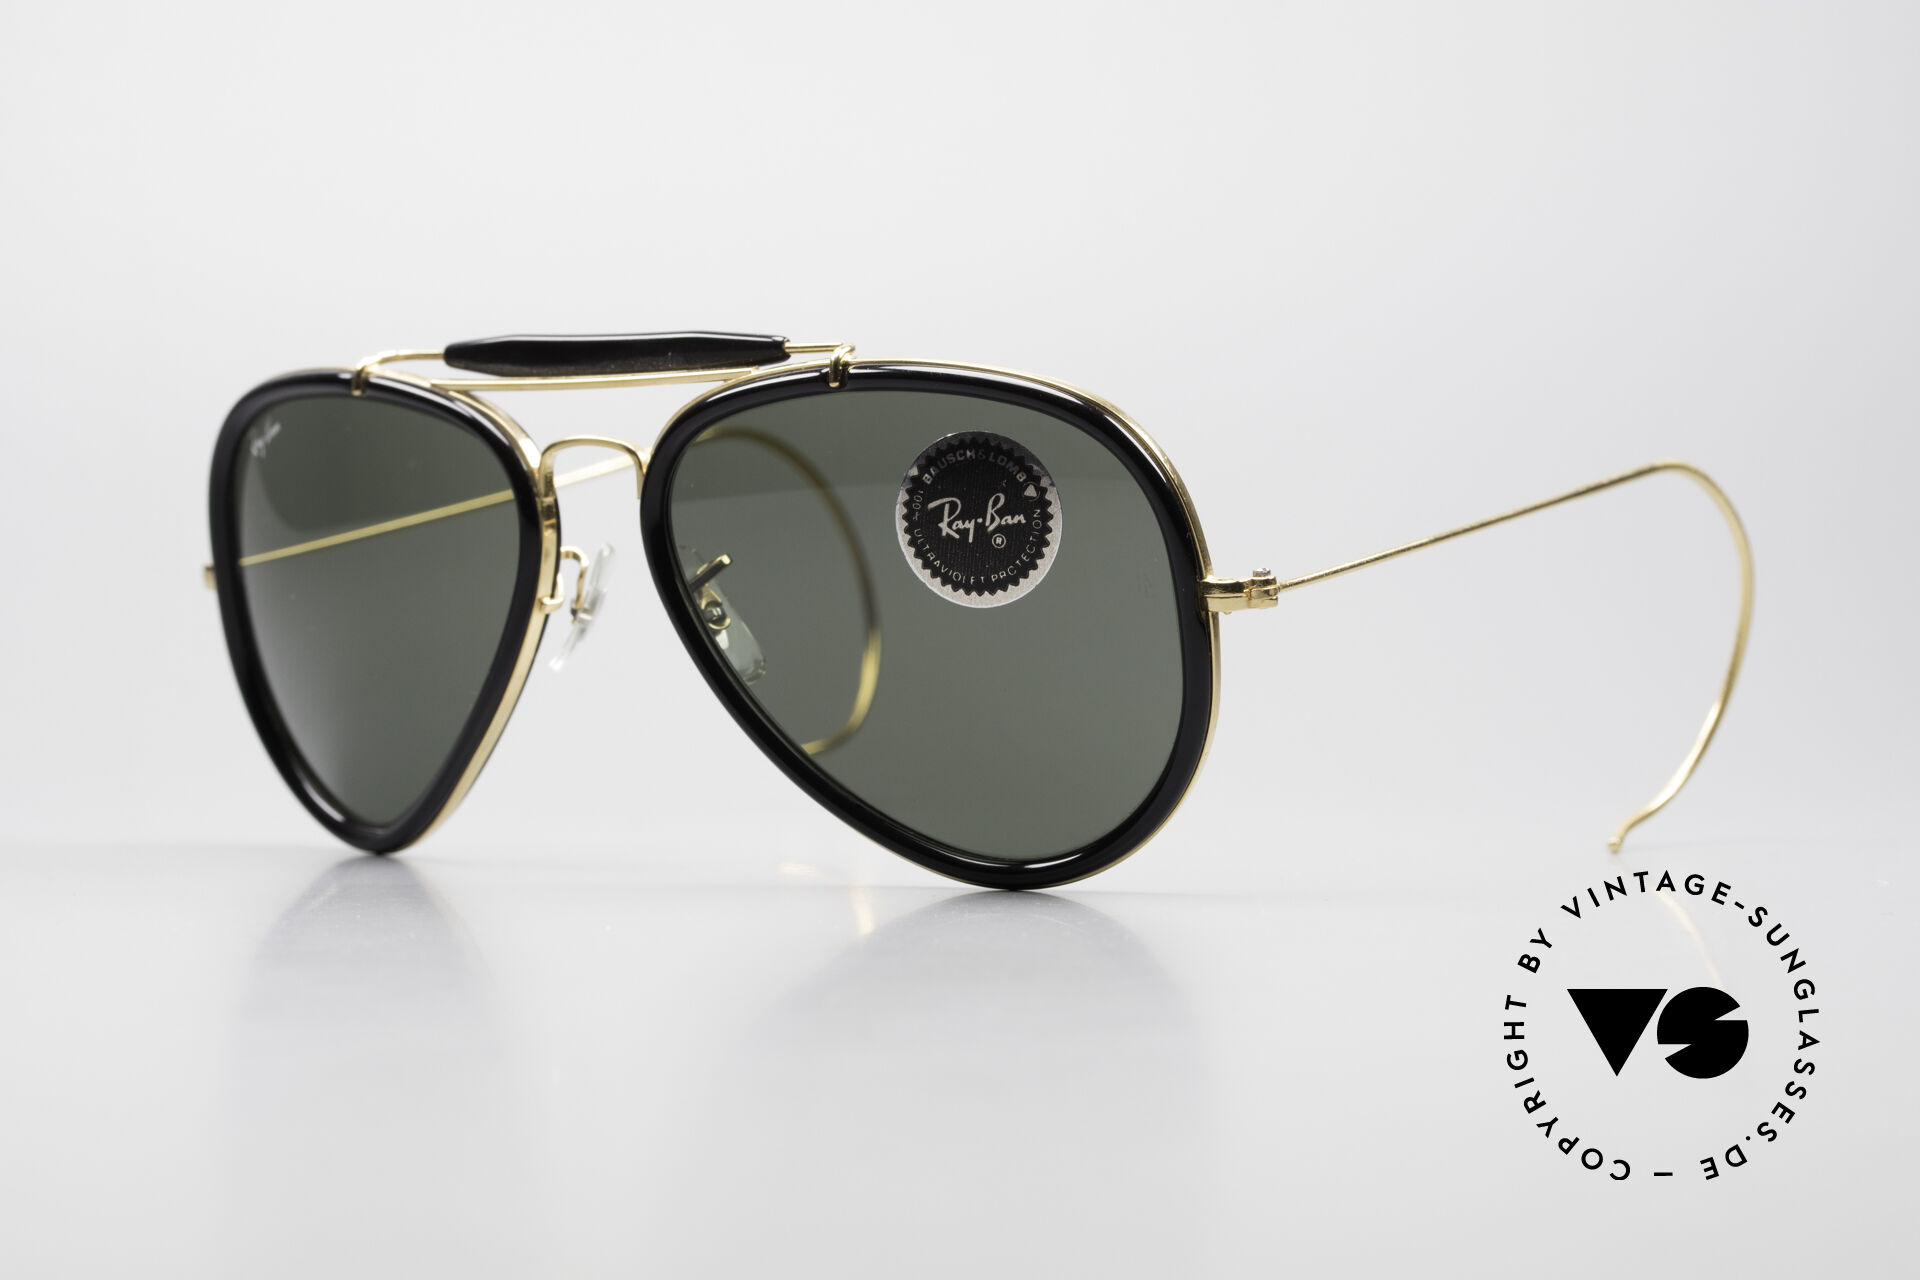 pilfer slidbane serviet Sunglasses Ray Ban Traditionals Outdoorsman B&L USA Aviator Shades 80s